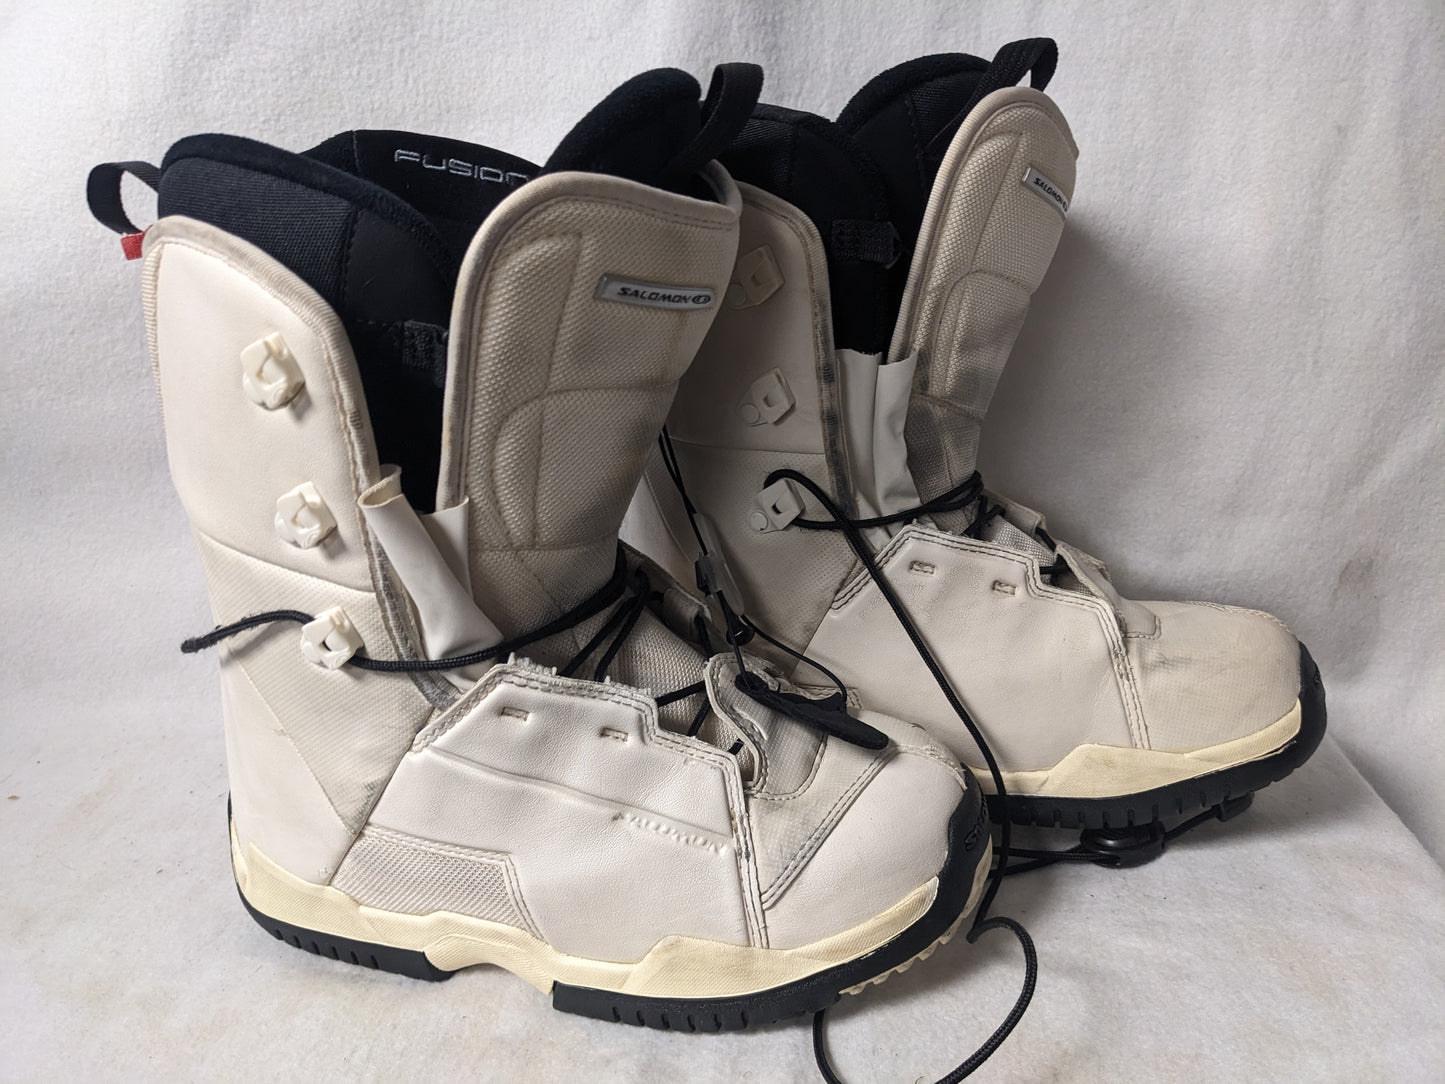 Salomon F20W AGIon Women's Snowboard Boots Size 7.5 Color White Condition Used